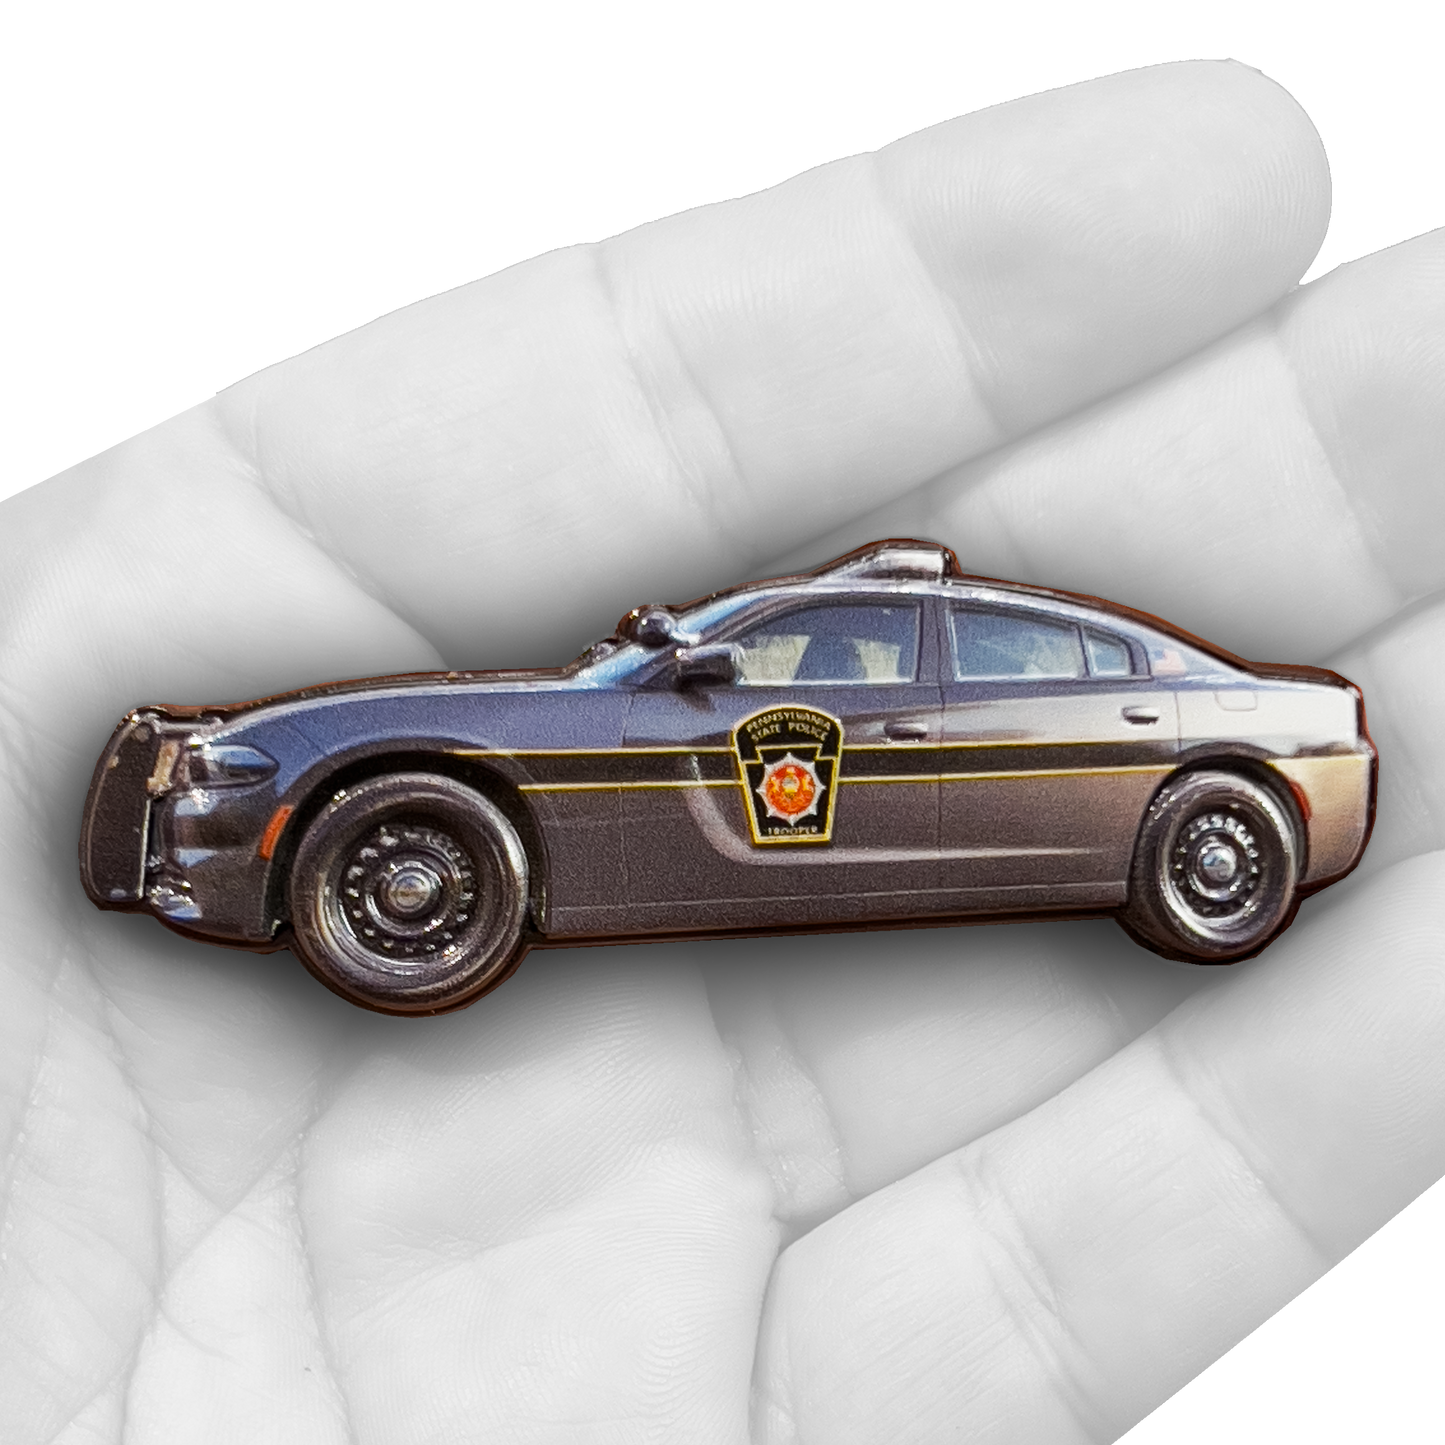 GL6-003 PSP Cruiser Pennsylvania State Police Trooper Challenge Coin Marked Unit Interceptor Car